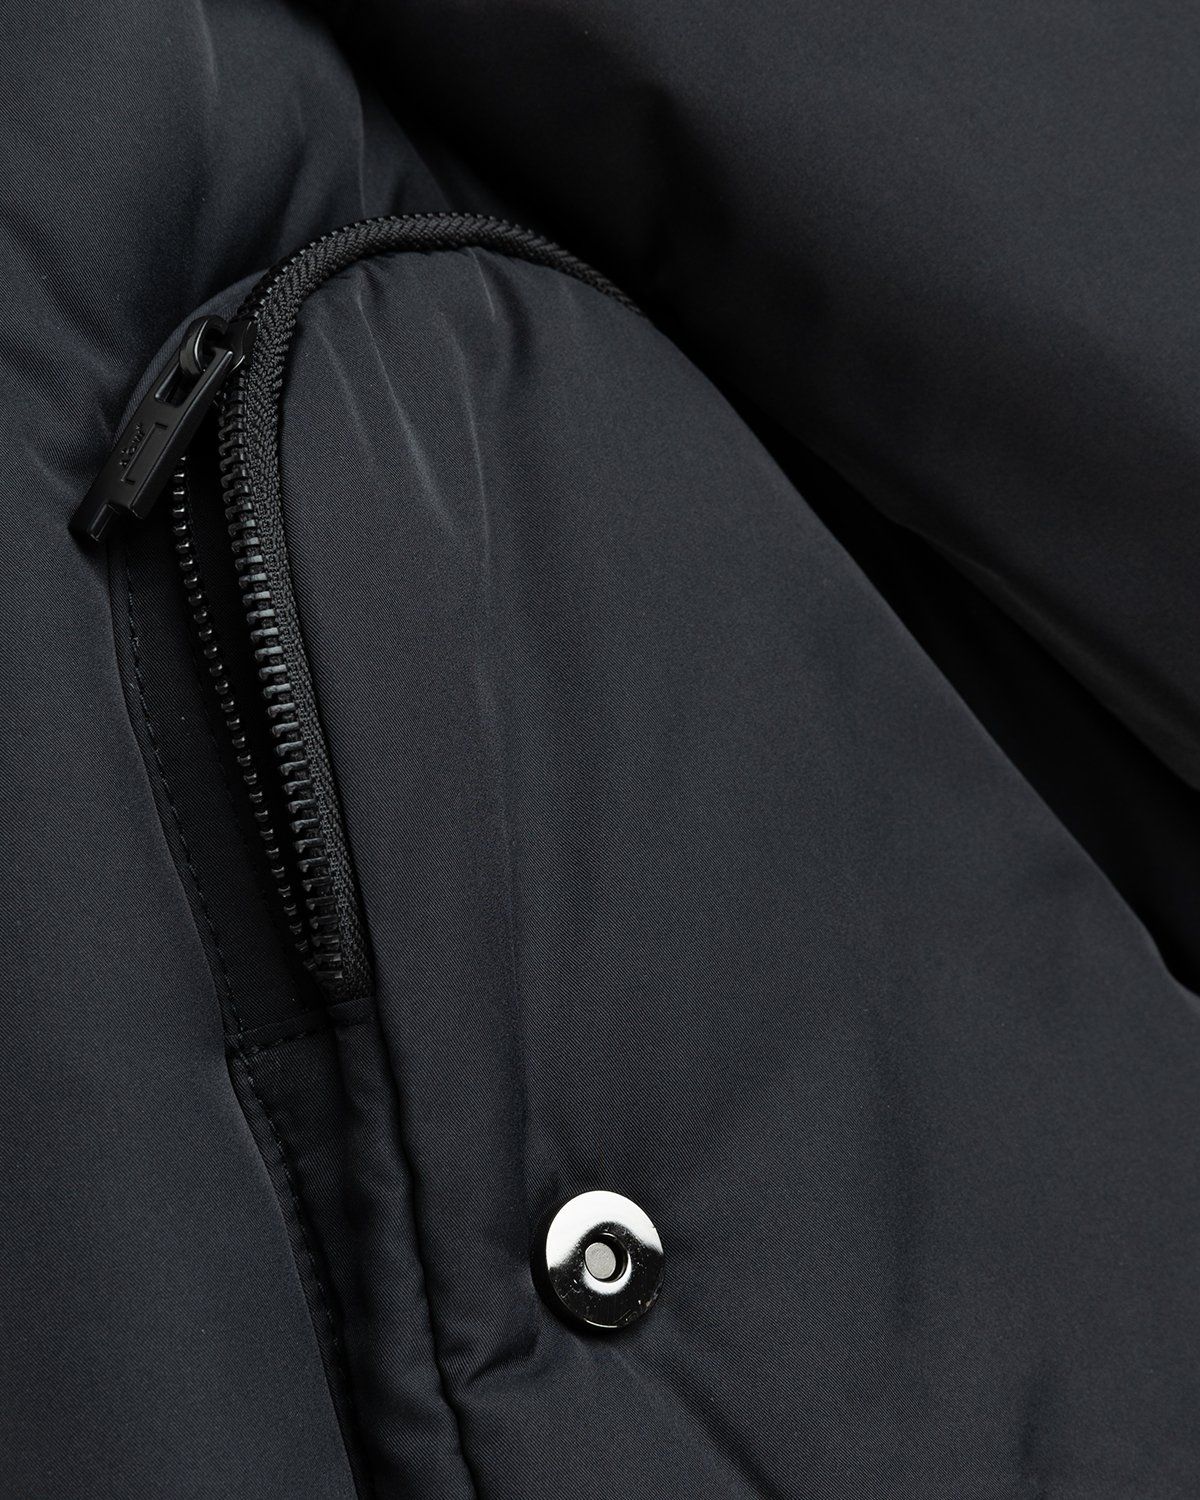 A-Cold-Wall* – Semi Gilet Body Bag Black - Shoulder Bags - Black - Image 6